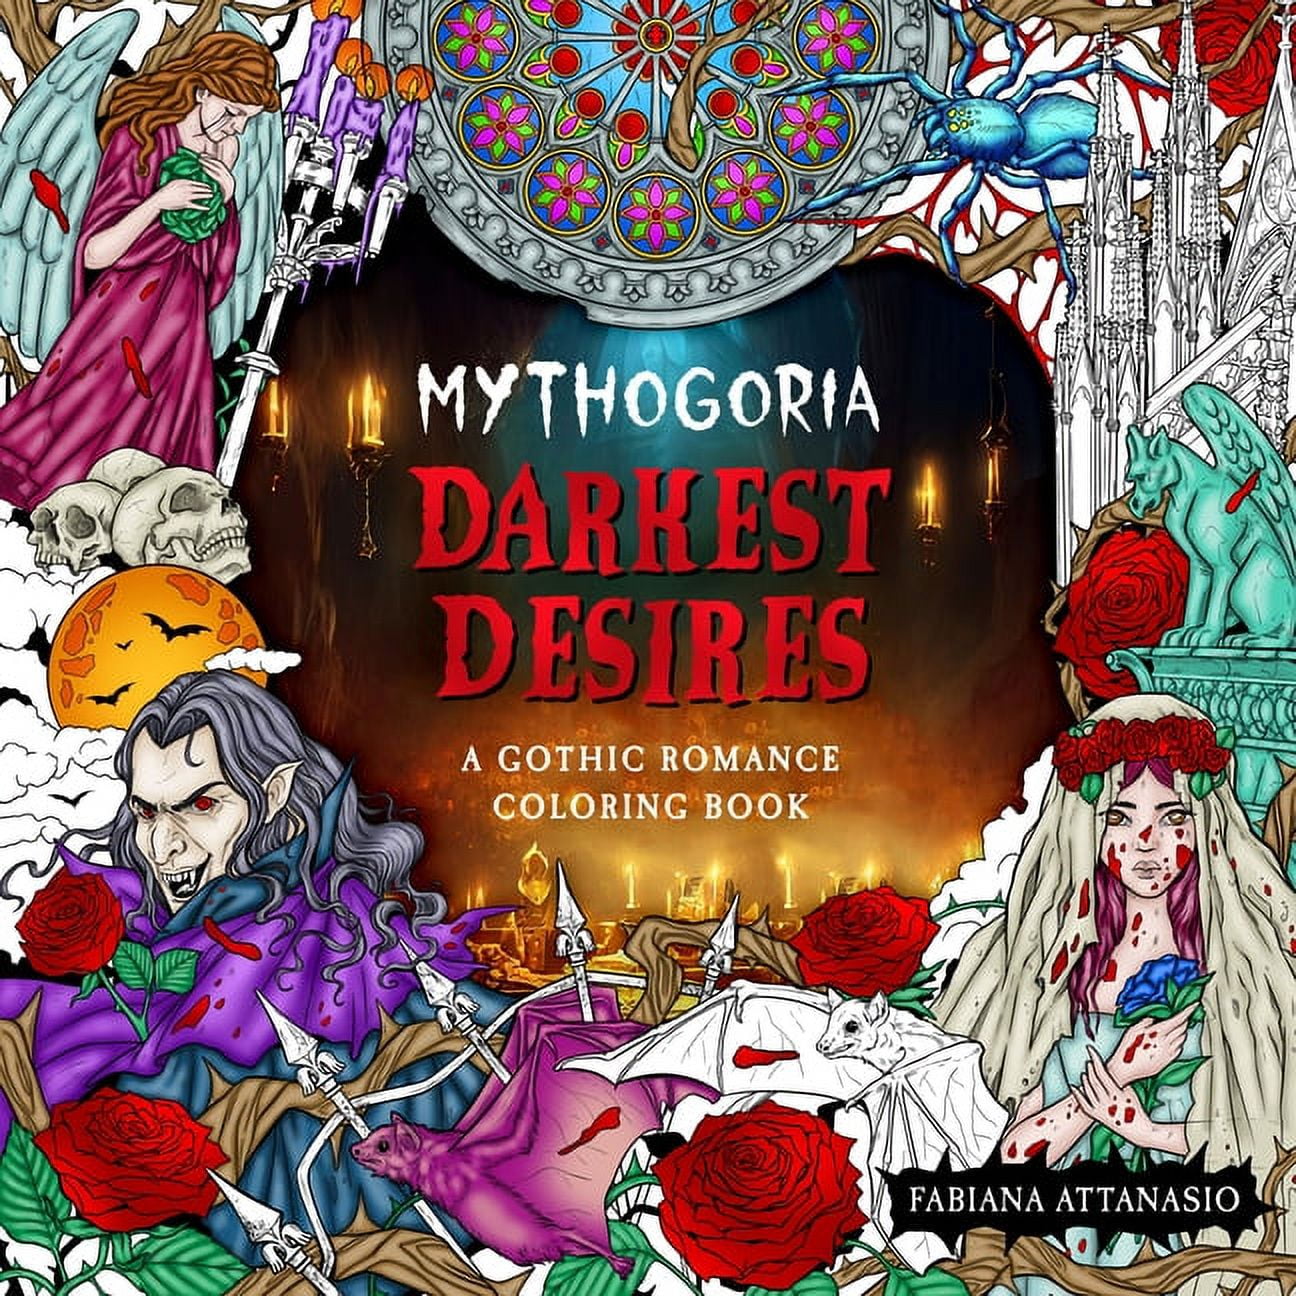 Mythogoria: Darkest Desires: A Gothic Romance Coloring Book [Book]